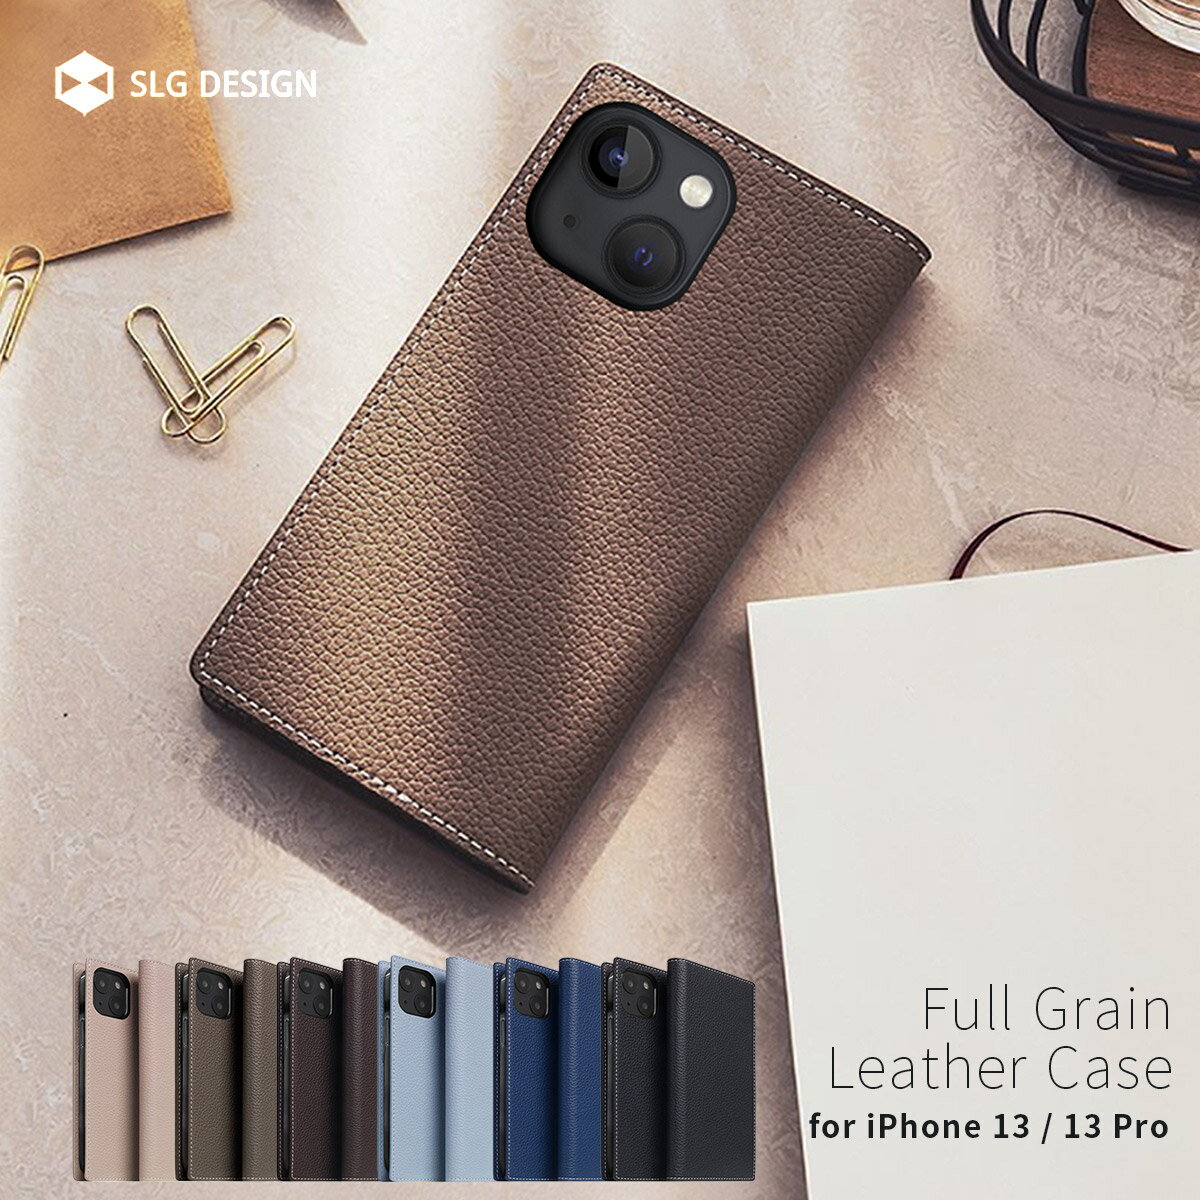  iPhone 13 / 13 Pro レザーケース SLG Design Full Grain Leather Case 手帳型 / 本革